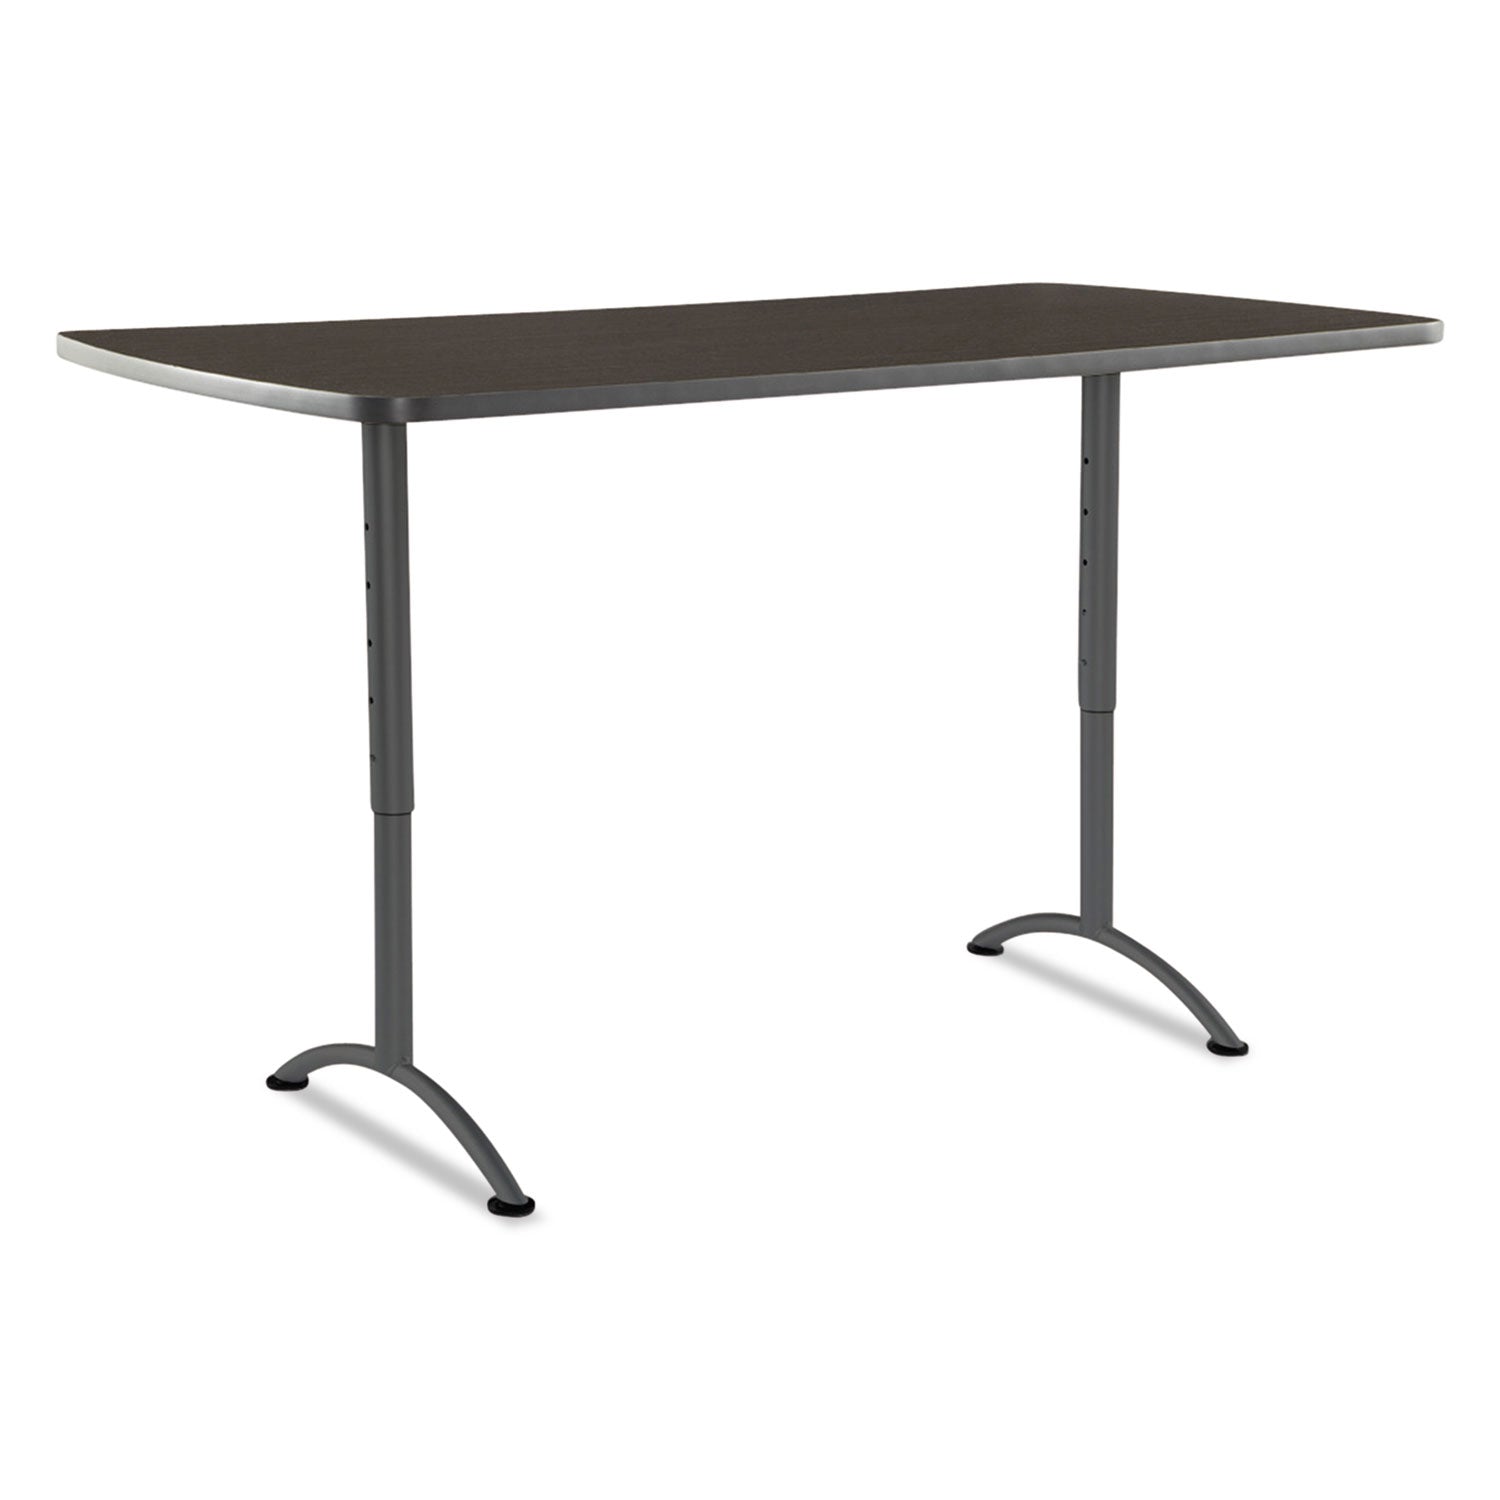 ARC Adjustable-Height Table, Rectangular, 36" x 72" x 30" to 42", Walnut Top, Gray Base - 